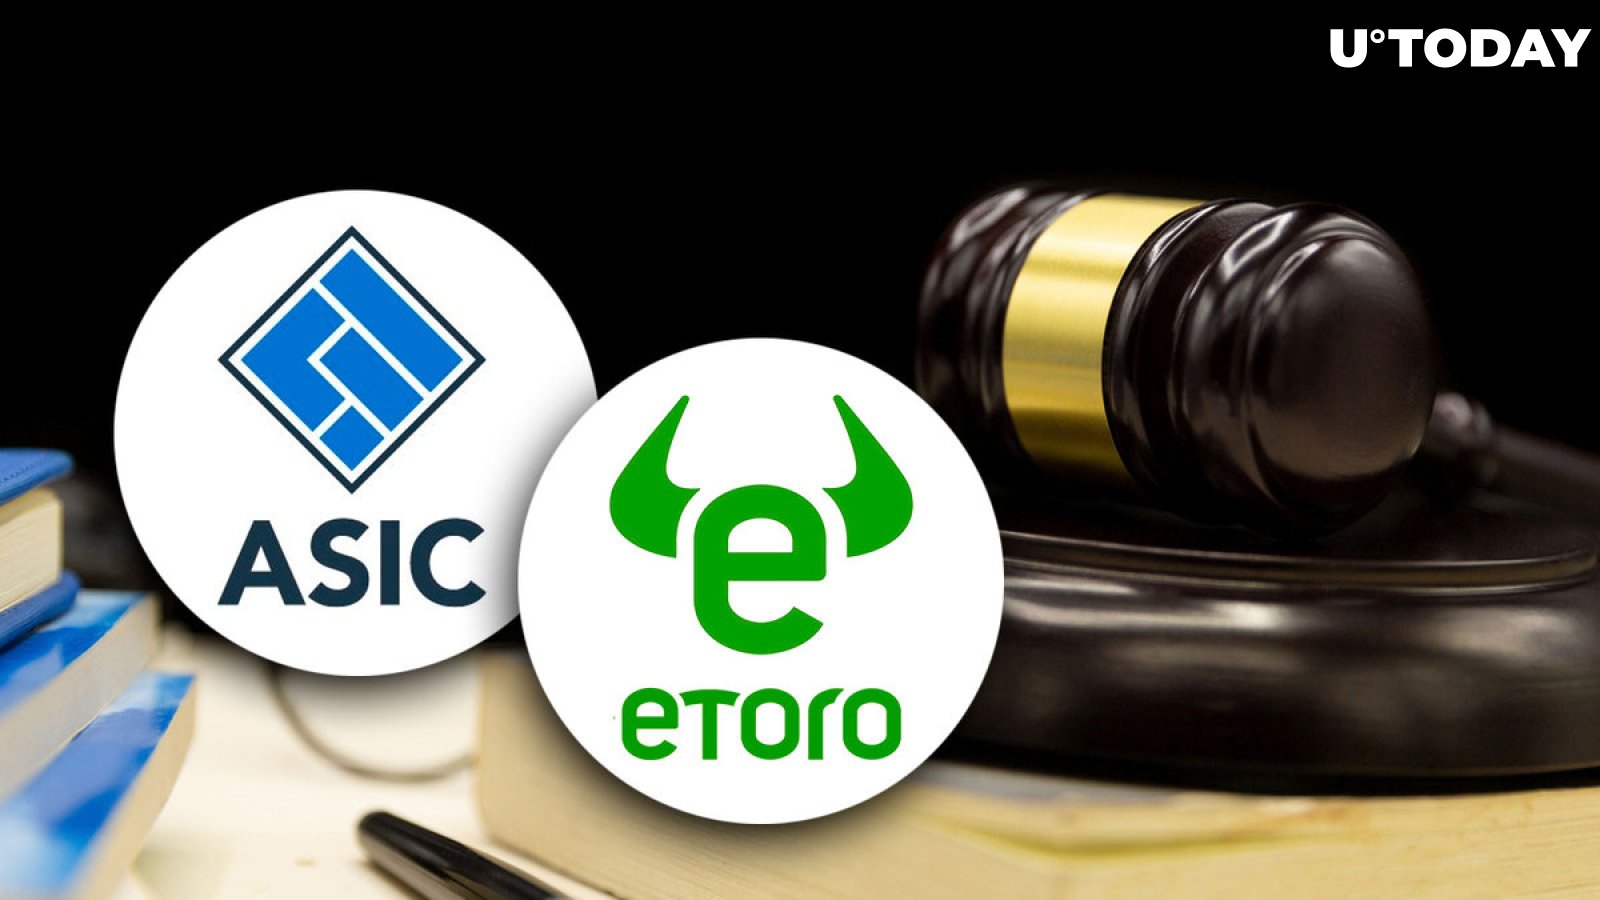 eToro Under Legal Siege in Australia, Here's Reason